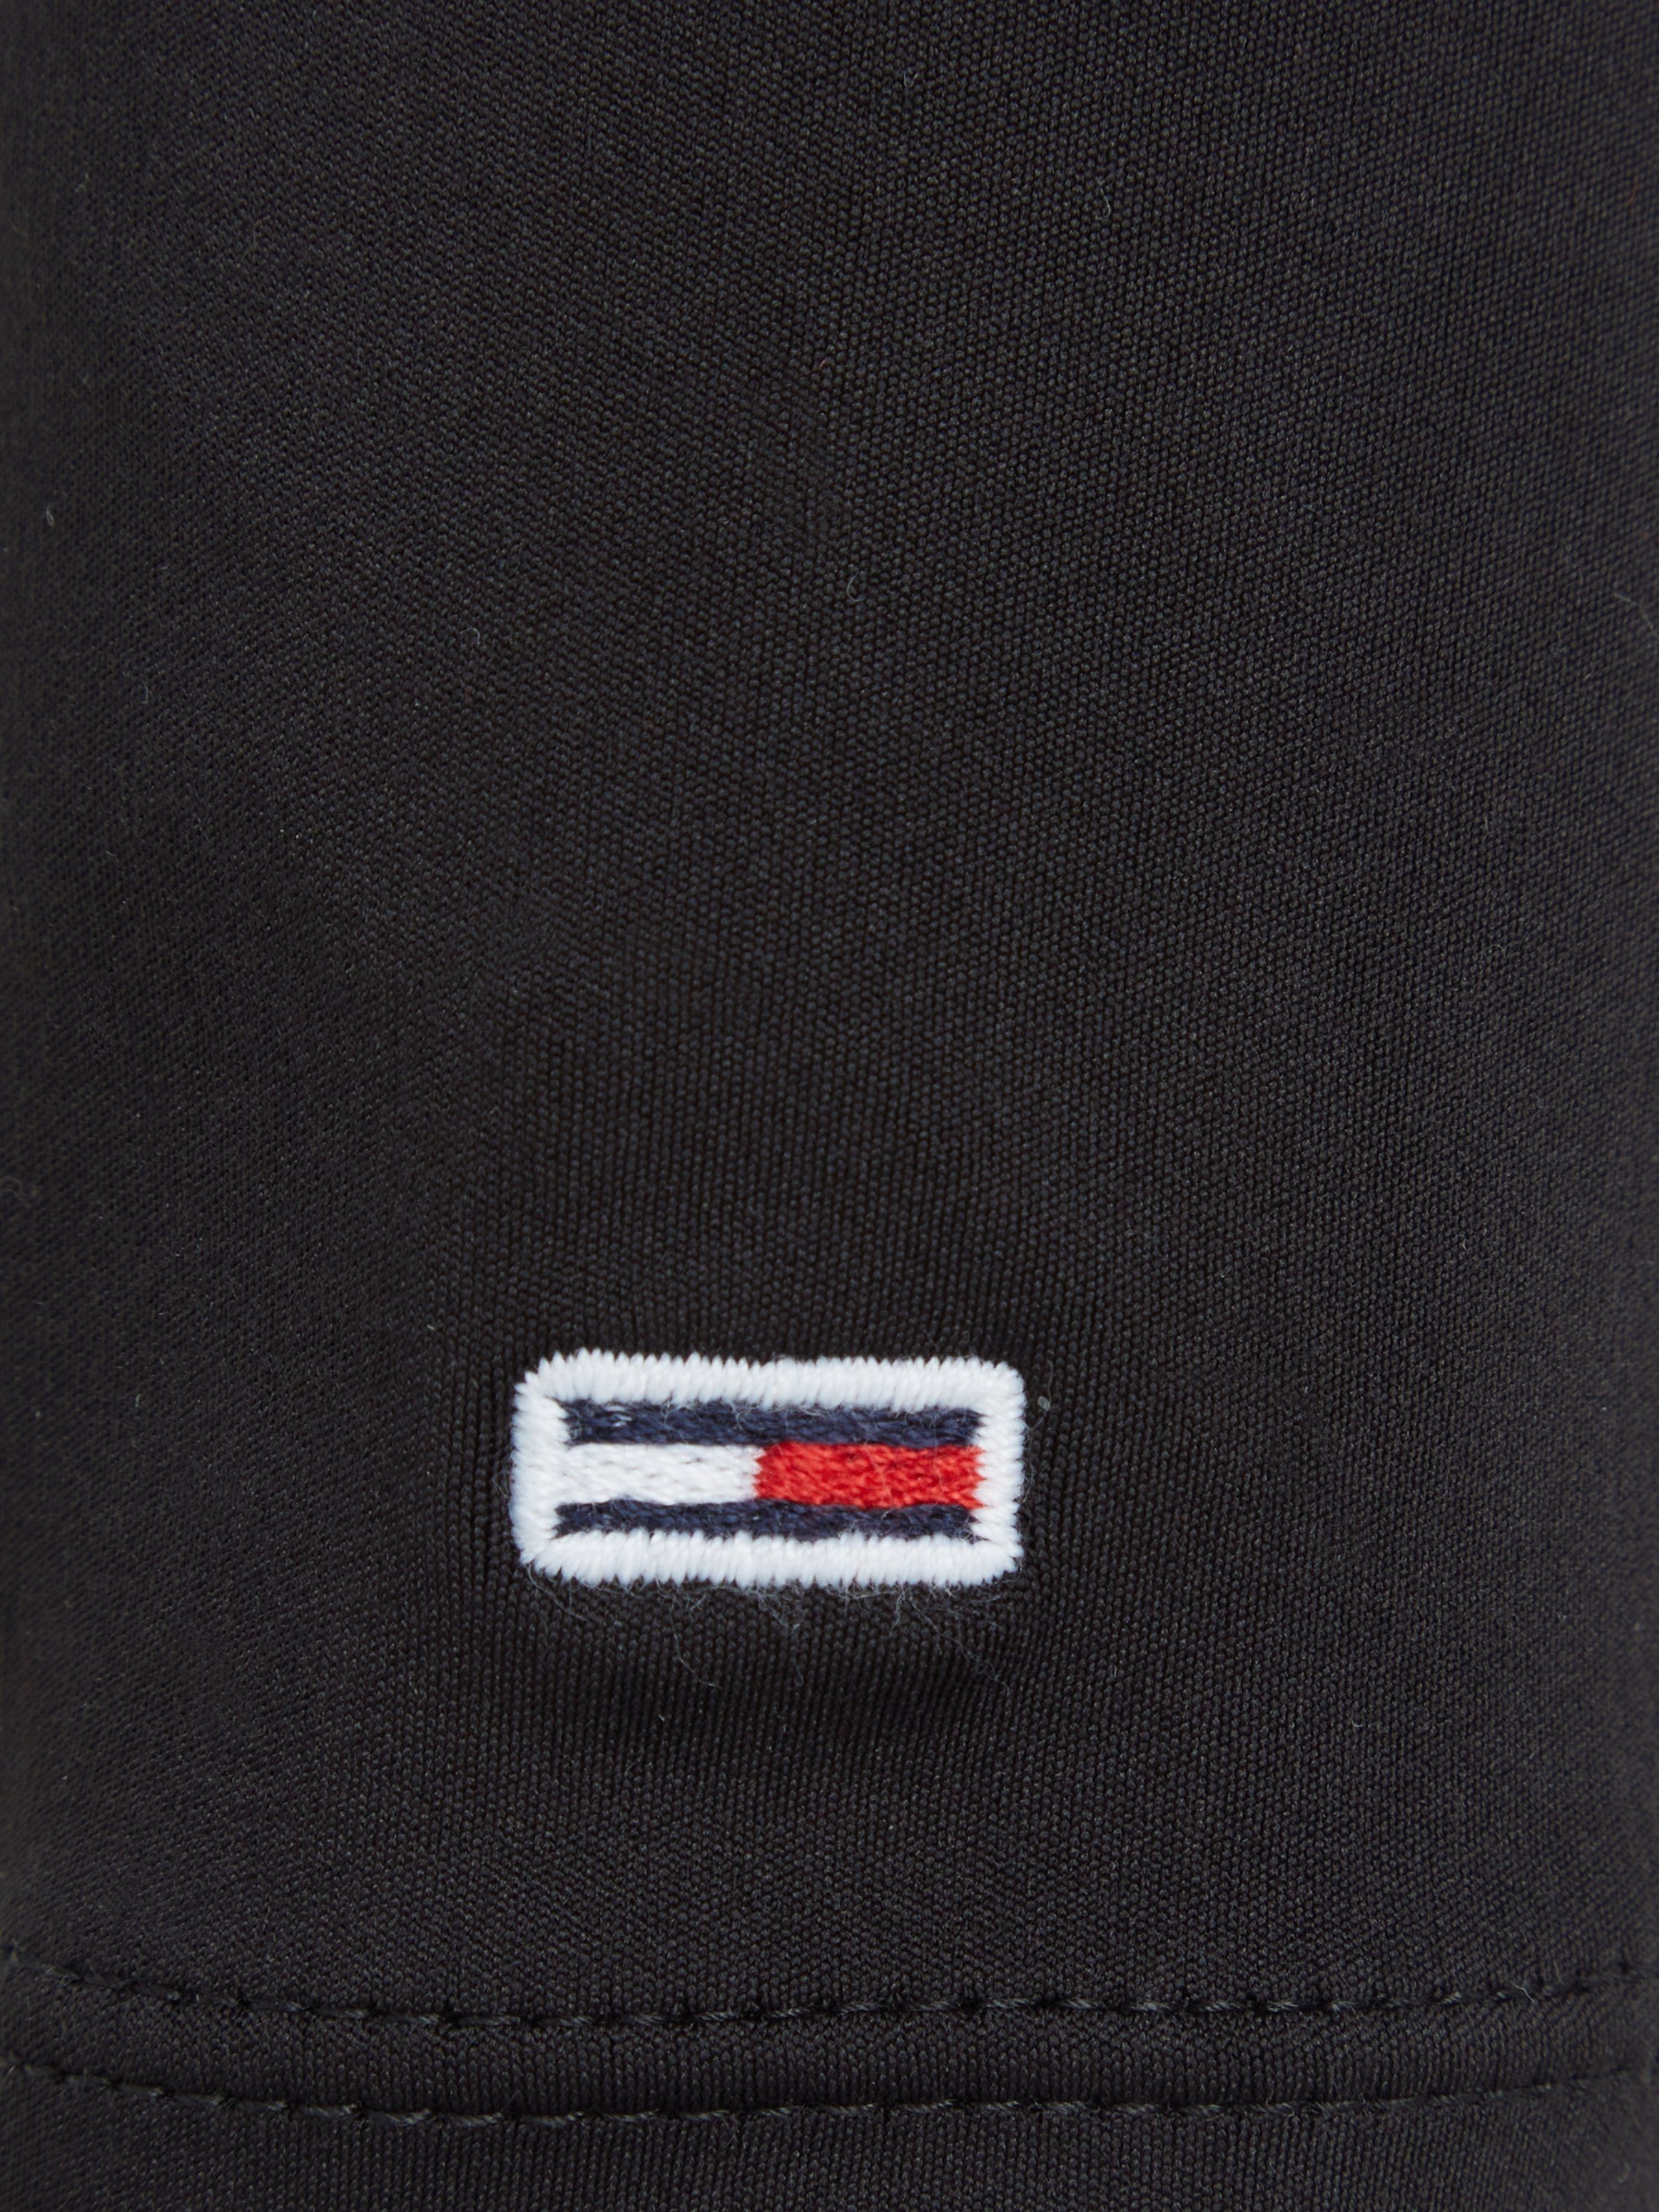 TAPE Logo Jeans asymmetrischem Tommy TOP mit ASYMETRIC LS LOGO TJW T-Shirt